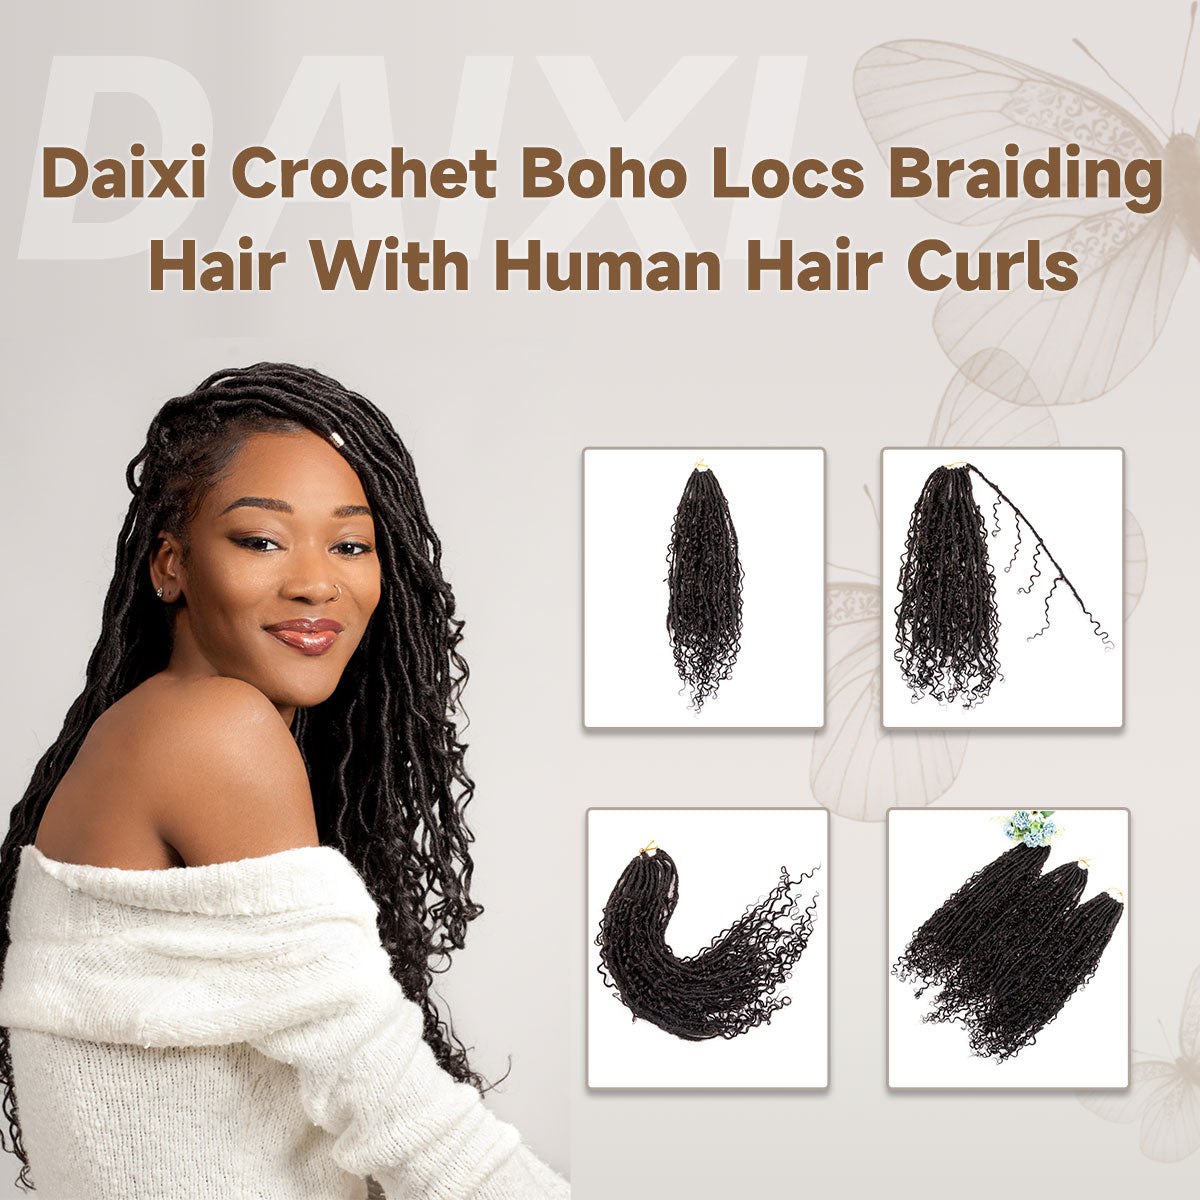 Crochet Boho Locs Braiding Hair With Human Hair Curls Pre Looped Boho Goddess Locs Crochet Hair Dreadlocks Curly Full Ends Hair Extensions For Black Women Natural Color